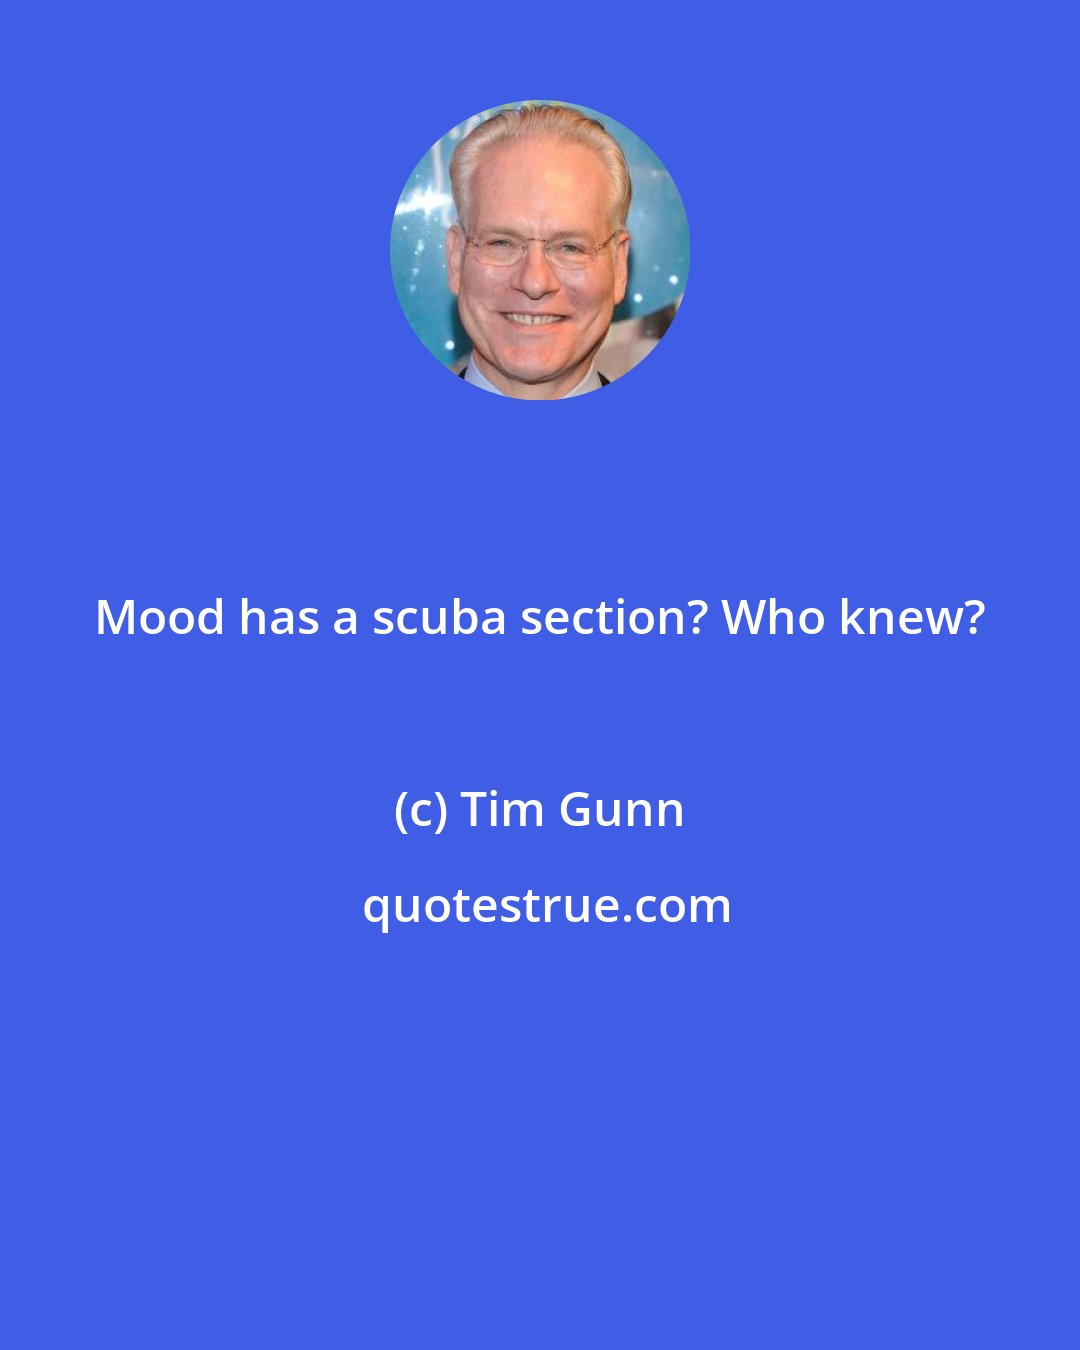 Tim Gunn: Mood has a scuba section? Who knew?